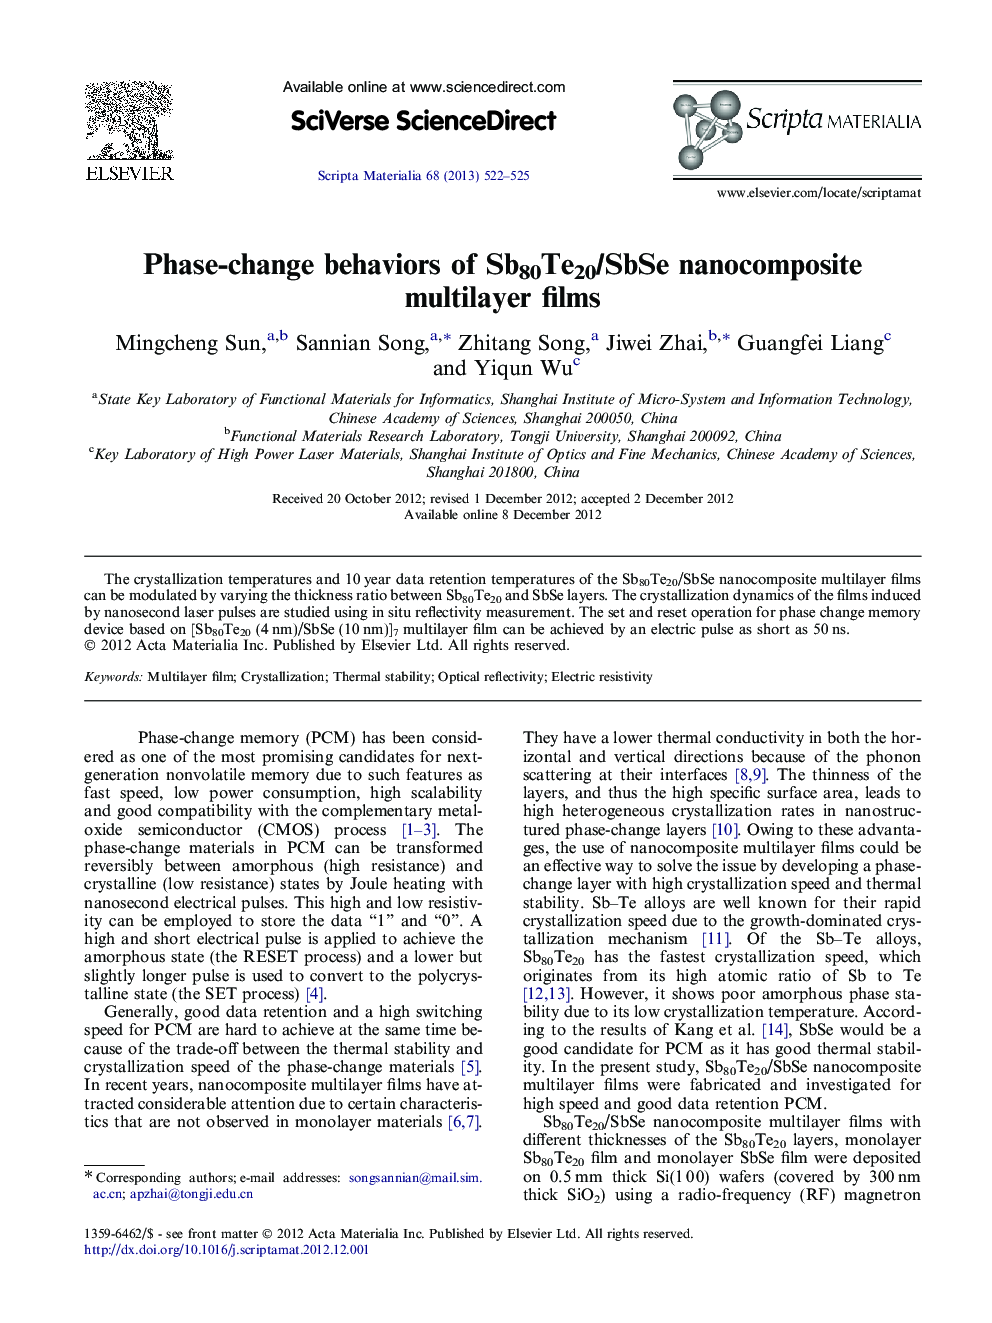 Phase-change behaviors of Sb80Te20/SbSe nanocomposite multilayer films